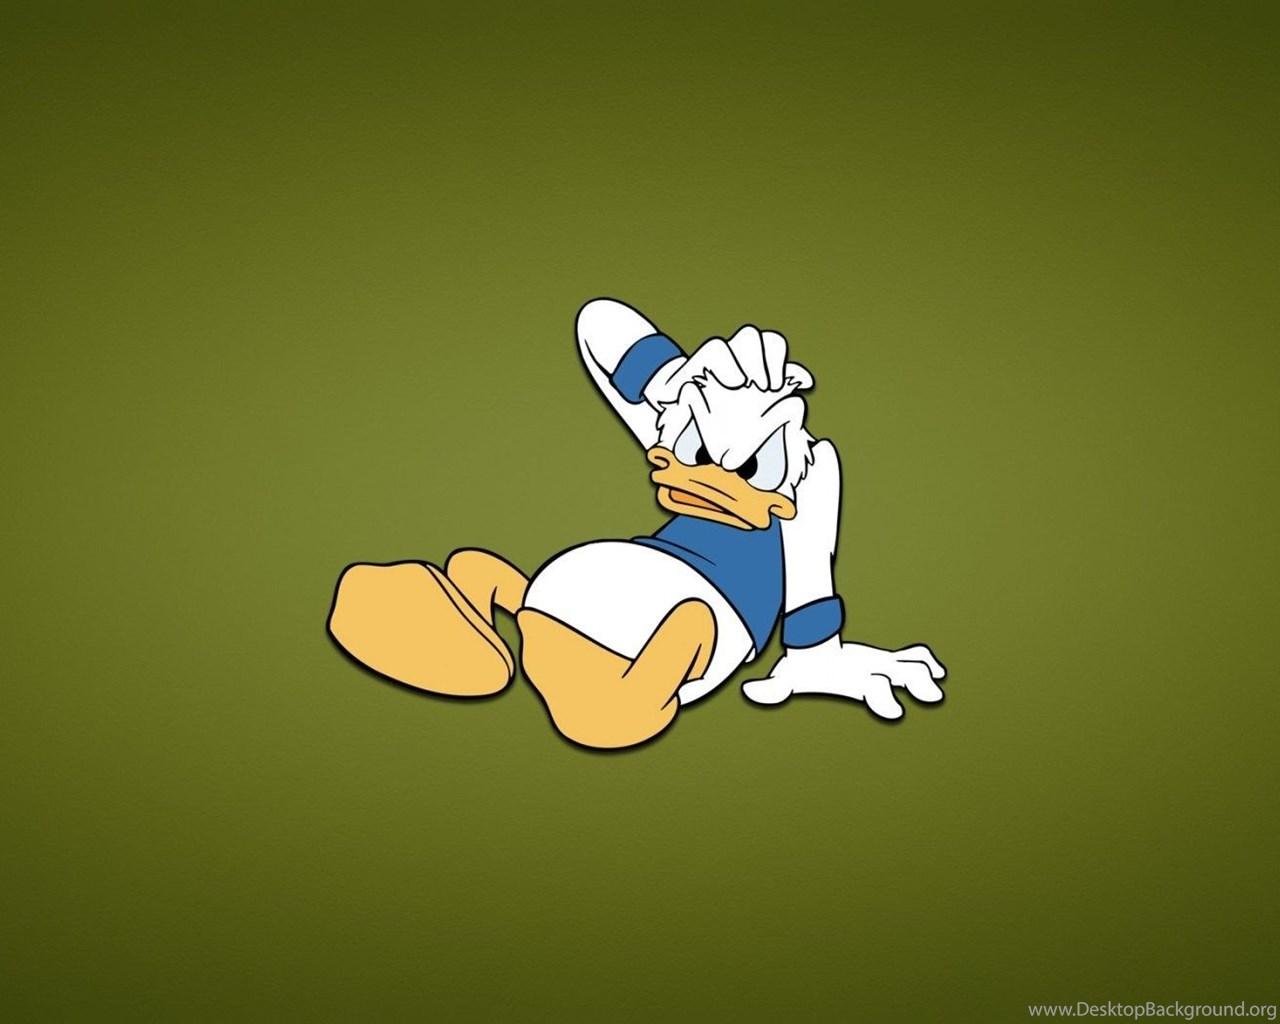 Donald Duck And Daffy Duck Wallpaper. Desktop Background